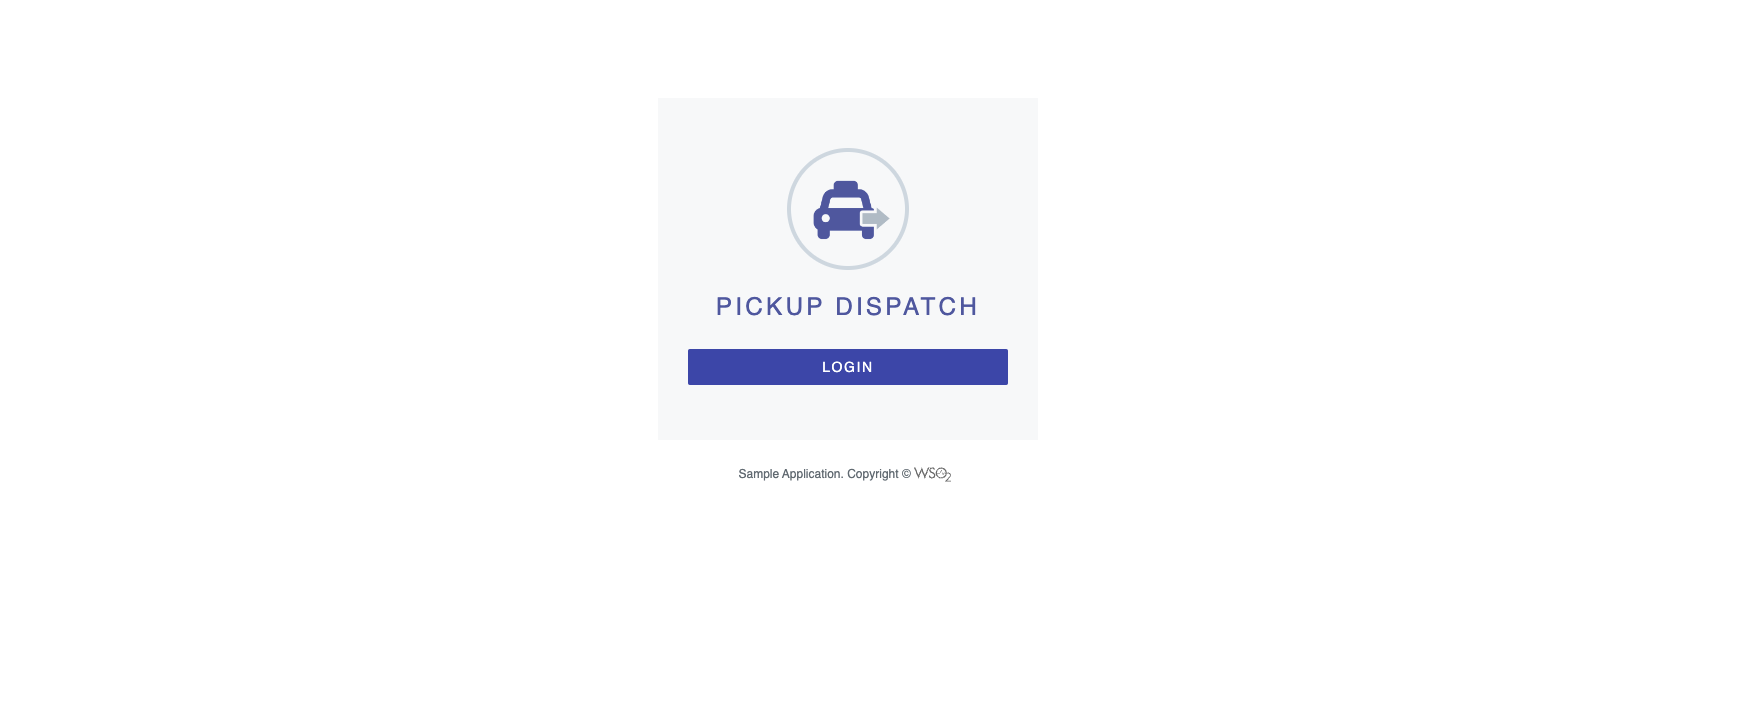 Pickup-dispatch application